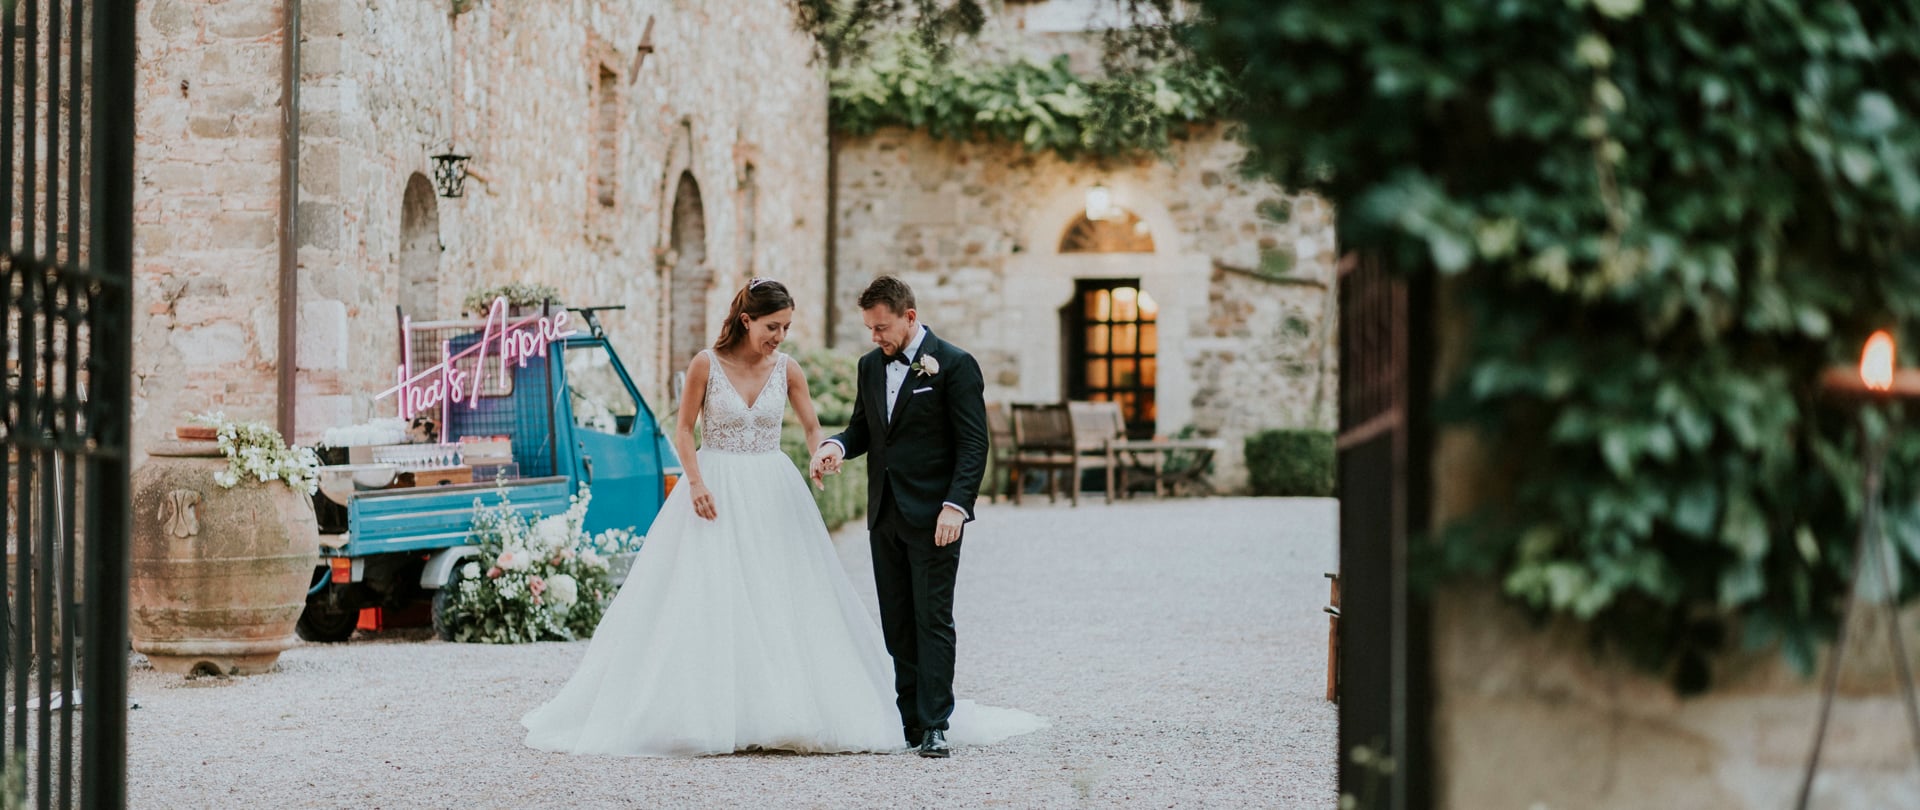 Alessia & James Wedding Video Filmed at Tuscany, Italy